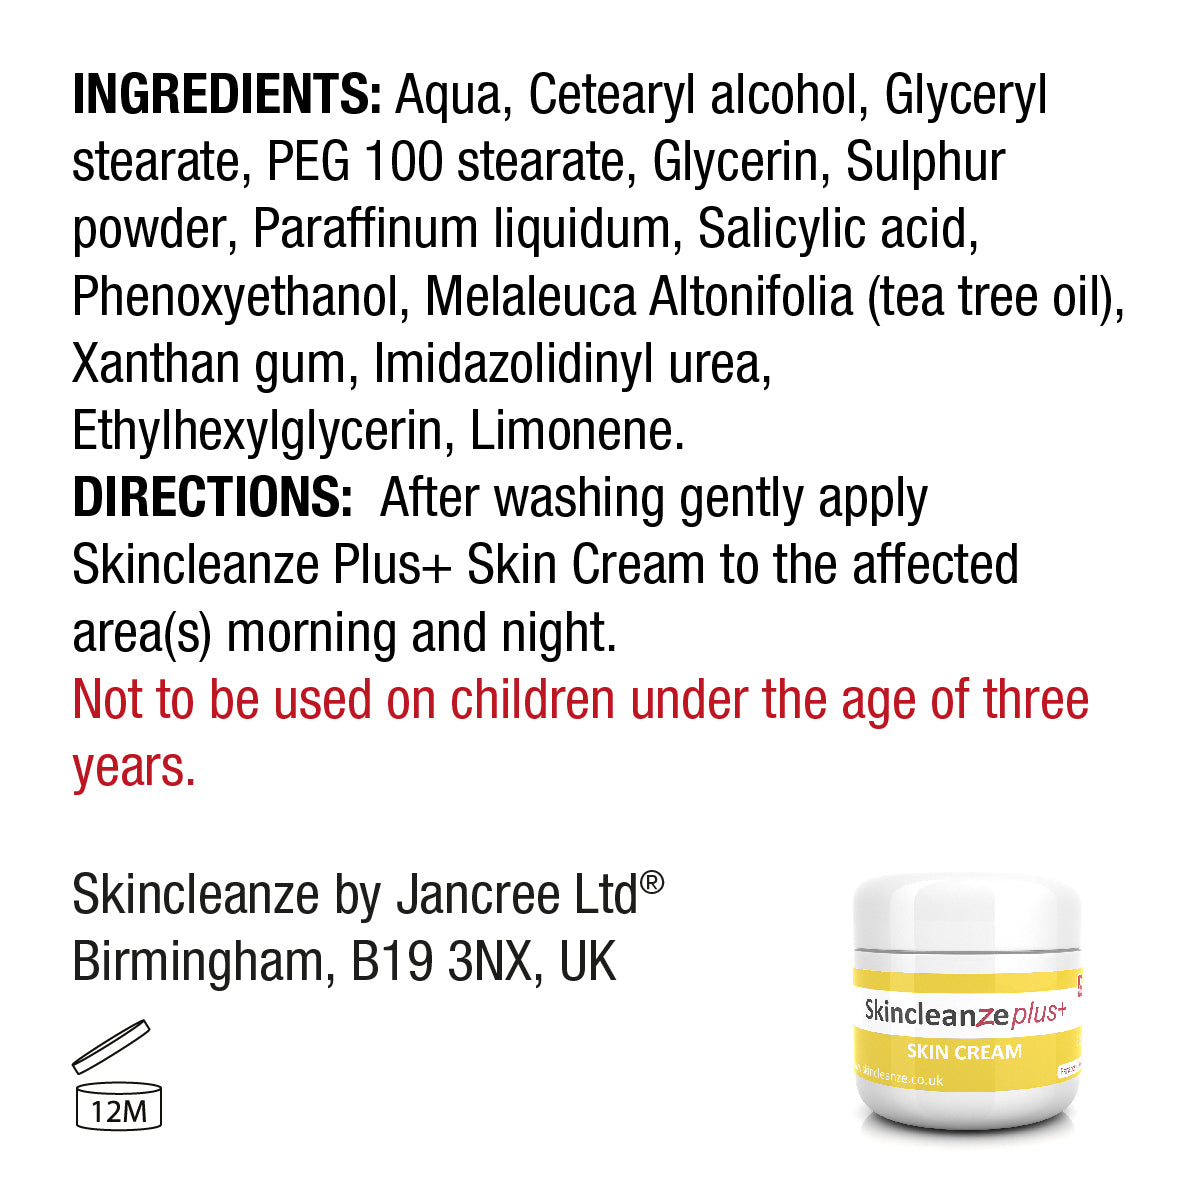 Skincleanze plus+ Acne Skin Cream - Double Strength (Pack of 2x 50g)